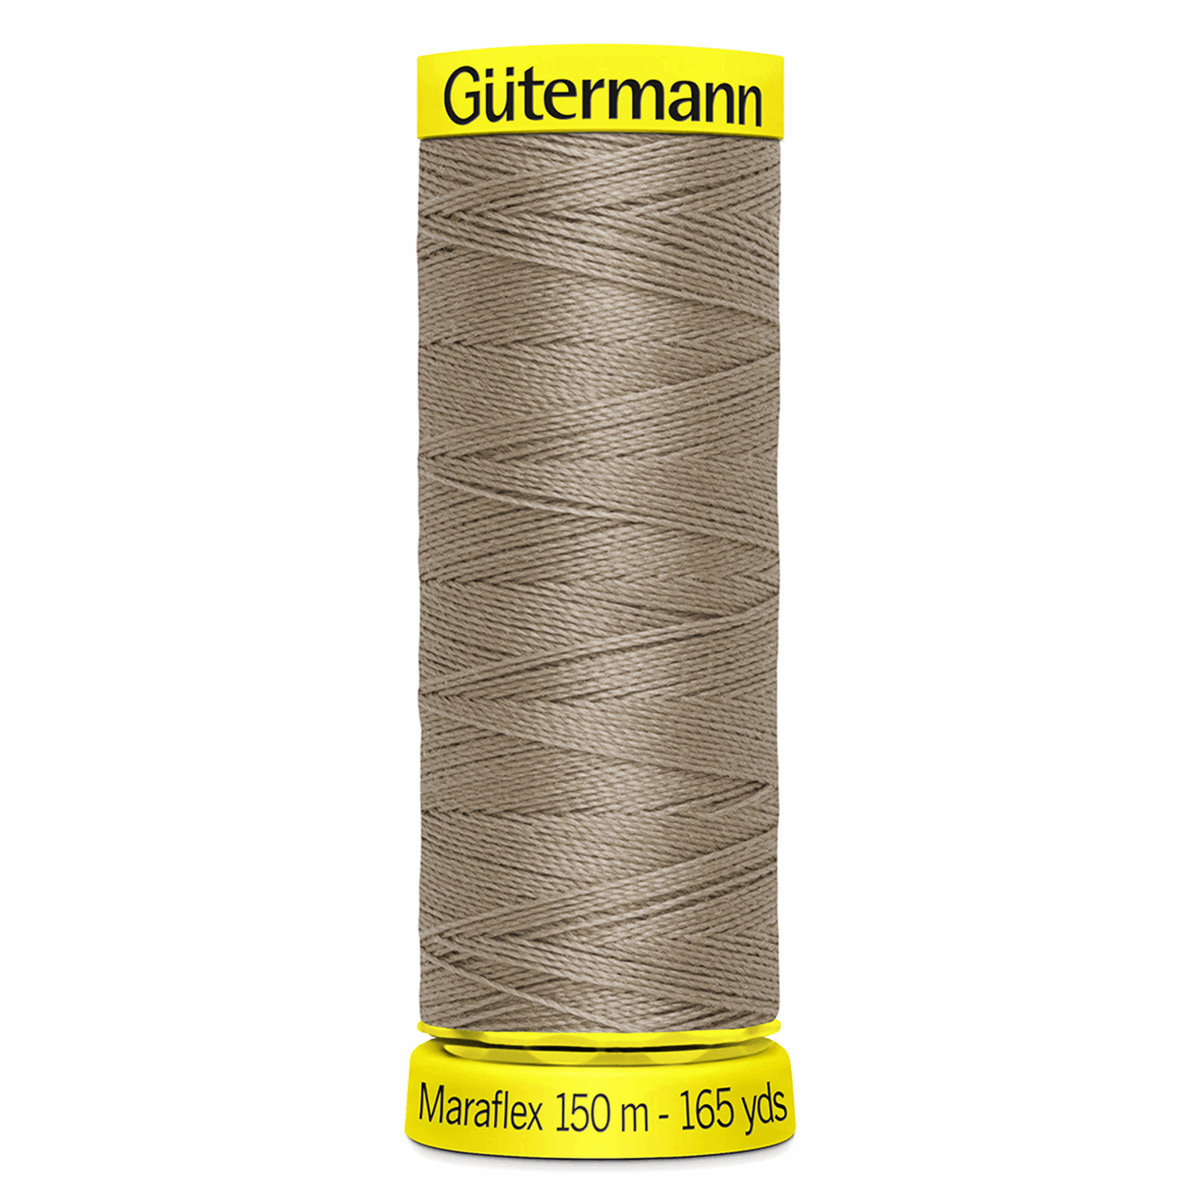 Gutermann Maraflex Elastic Sewing Thread 150m Light Brown 199